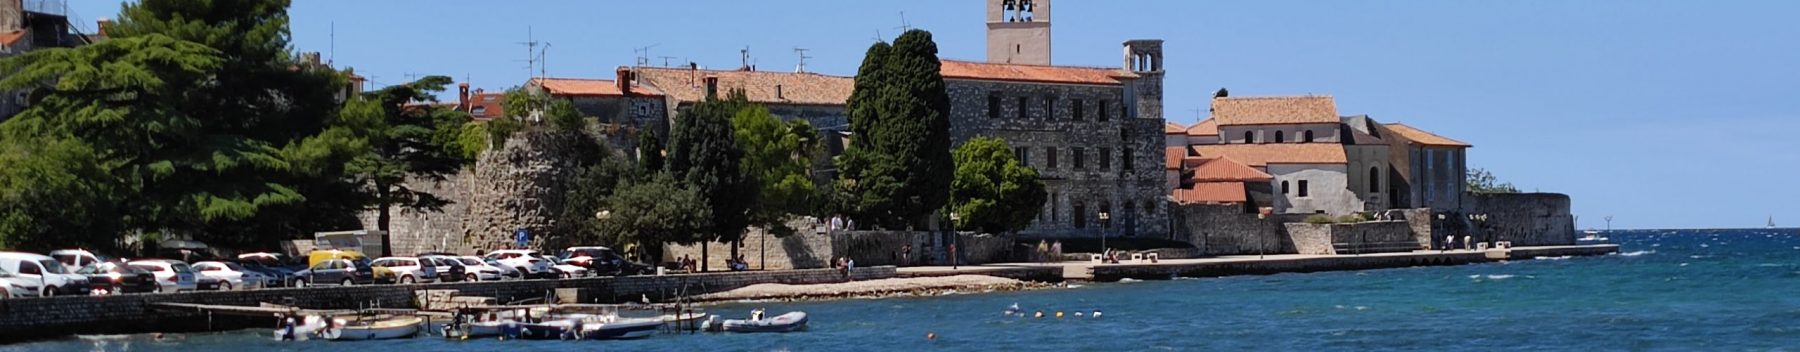 Istrien – Kroatiens sonnige Halbinsel entdecken & geniessen